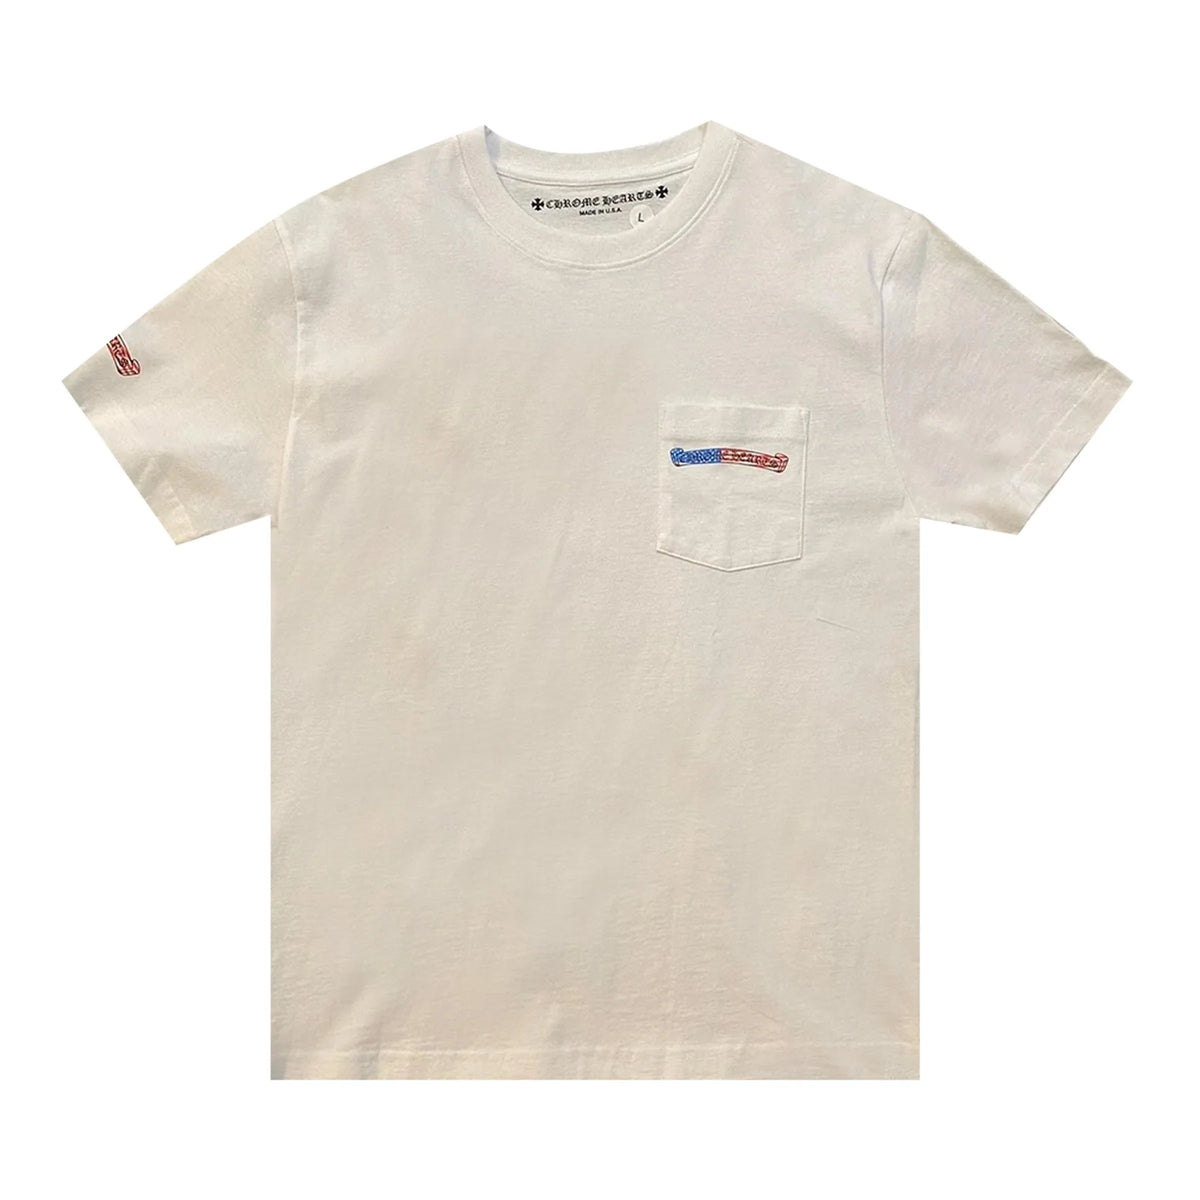 Chrome Hearts Matty Boy America T-shirt White (PreOwned)